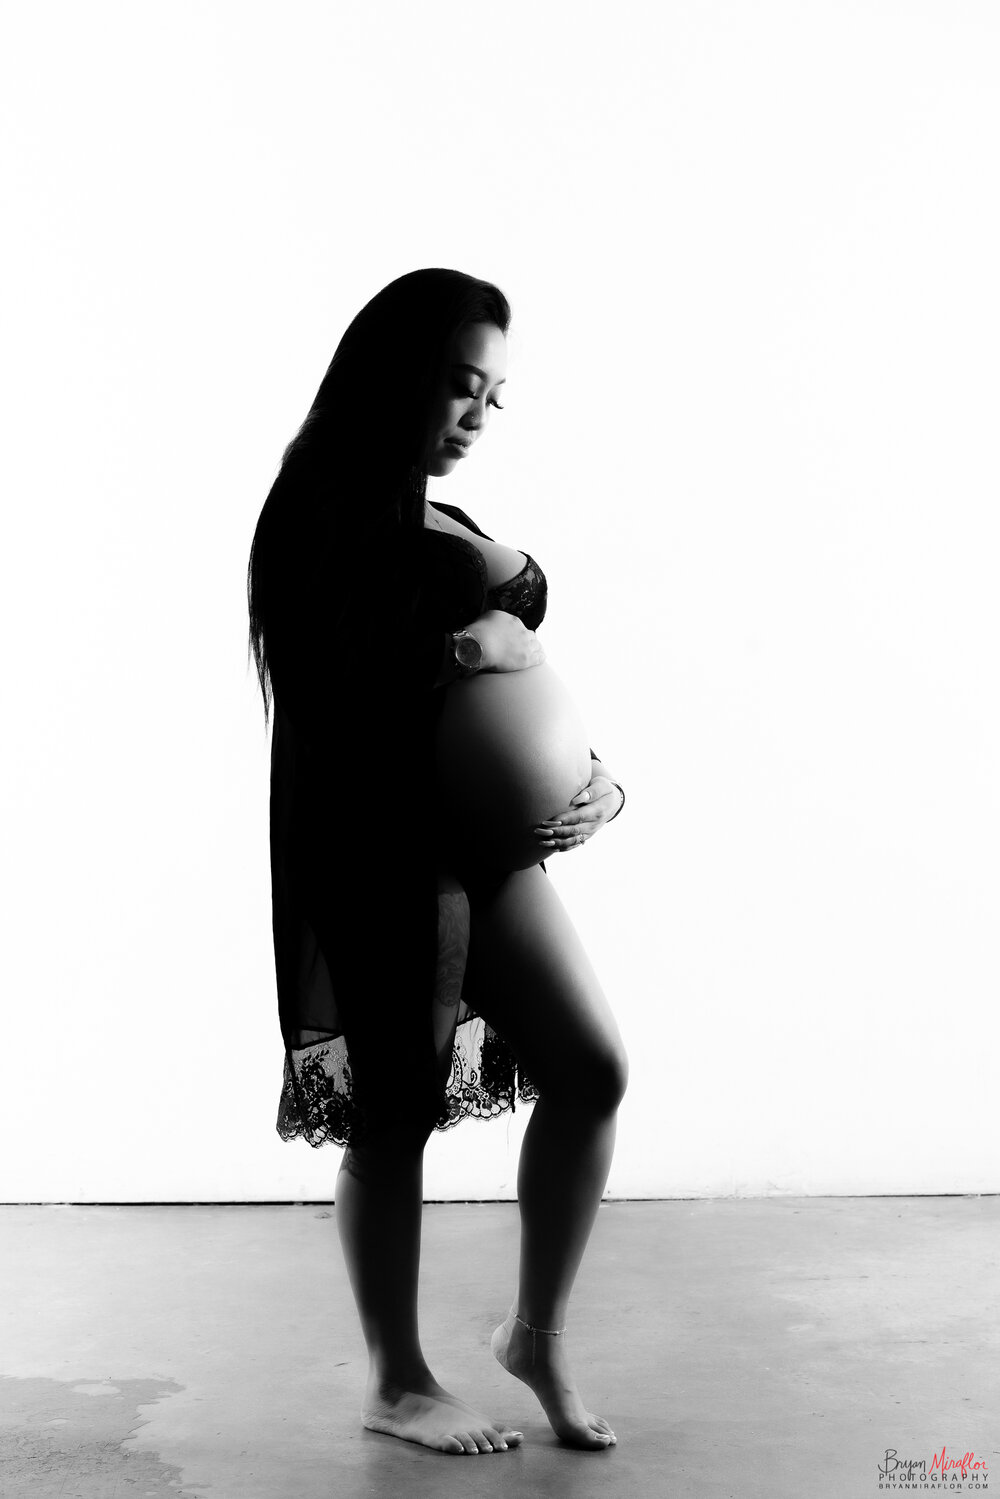 Bryan-Miraflor-Photography-Nguyen-Maternity-Photoshoot-FD-PhotoStudio-2020-030.jpg